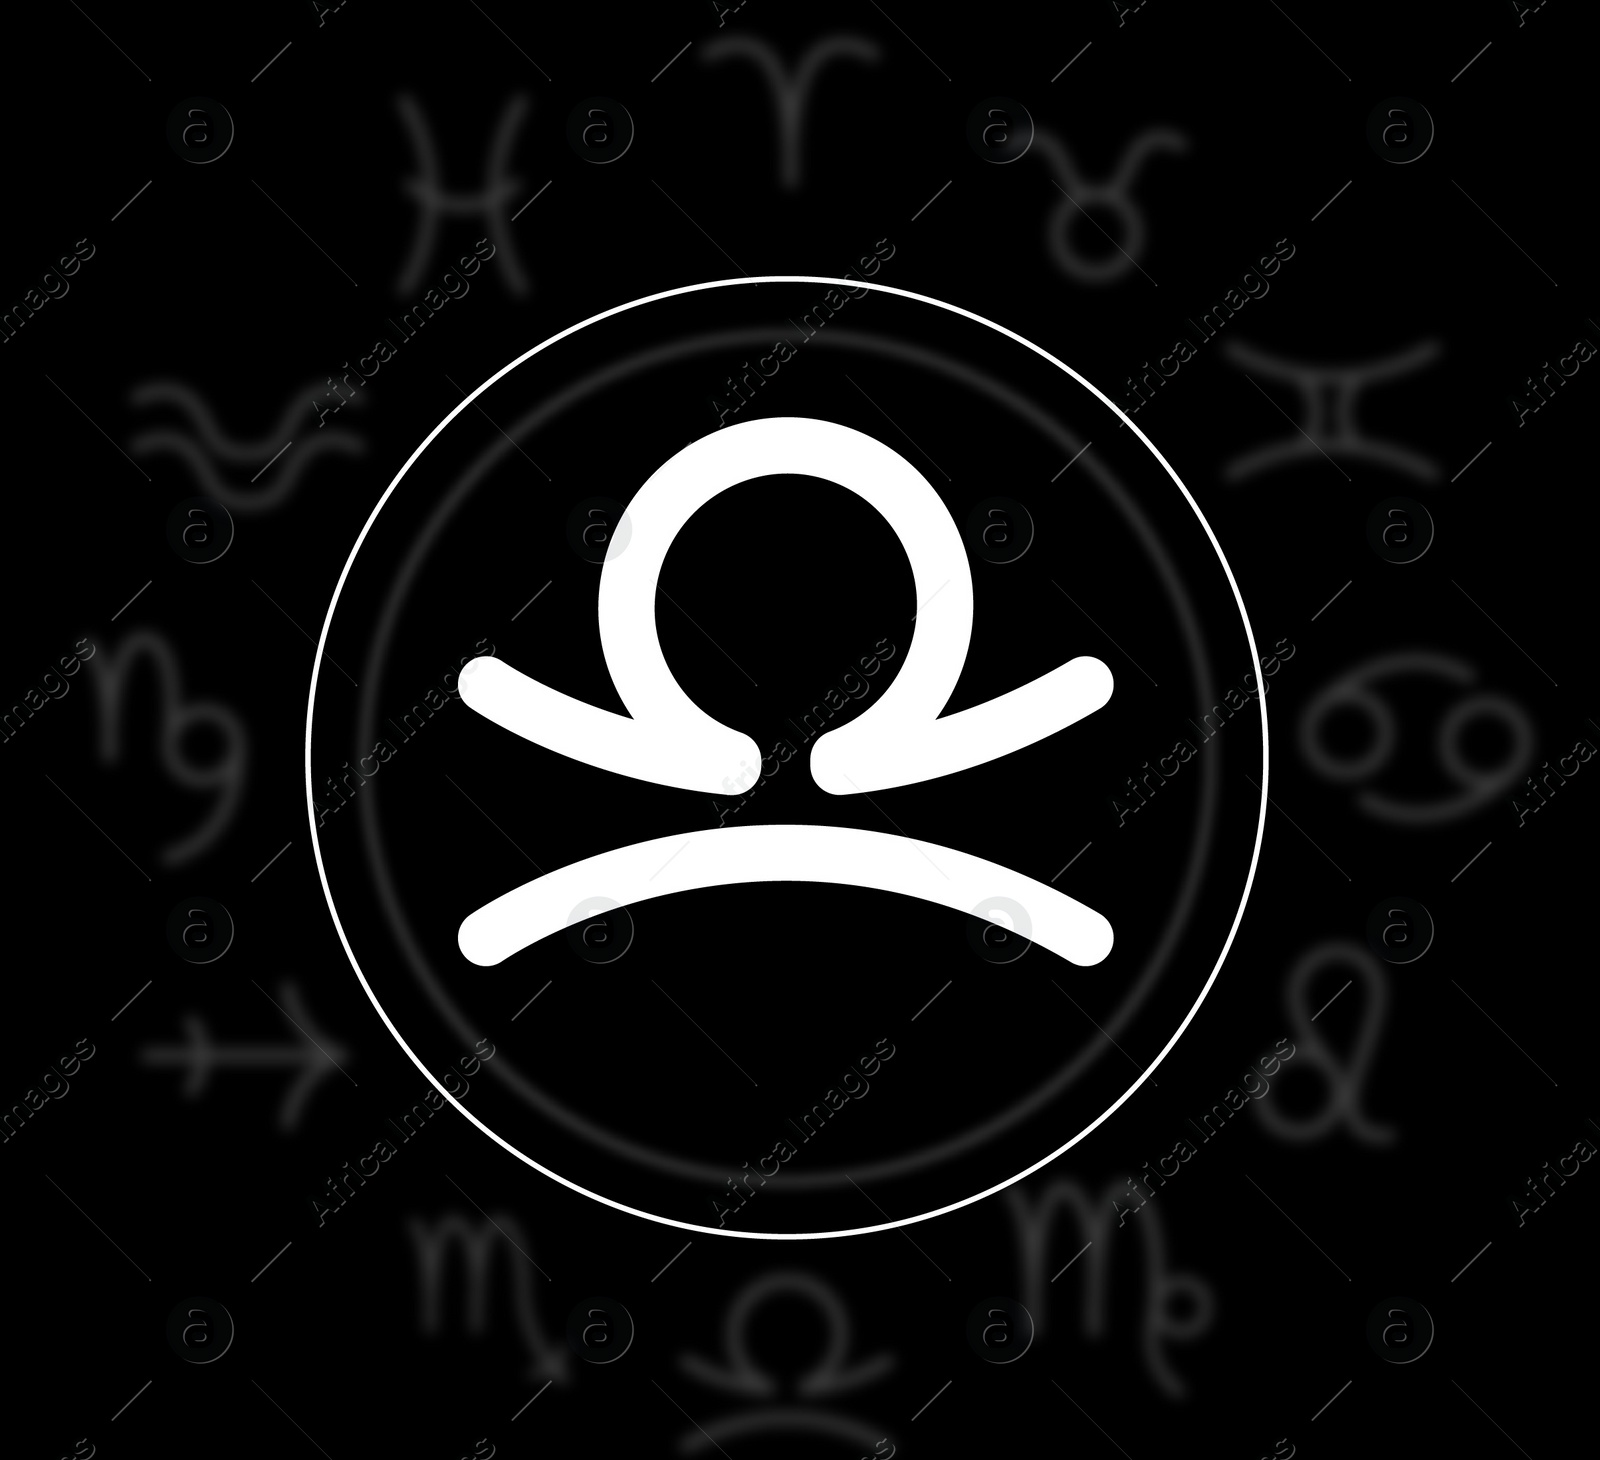 Illustration of Libra astrological sign and zodiac wheel on black background. Illustration 